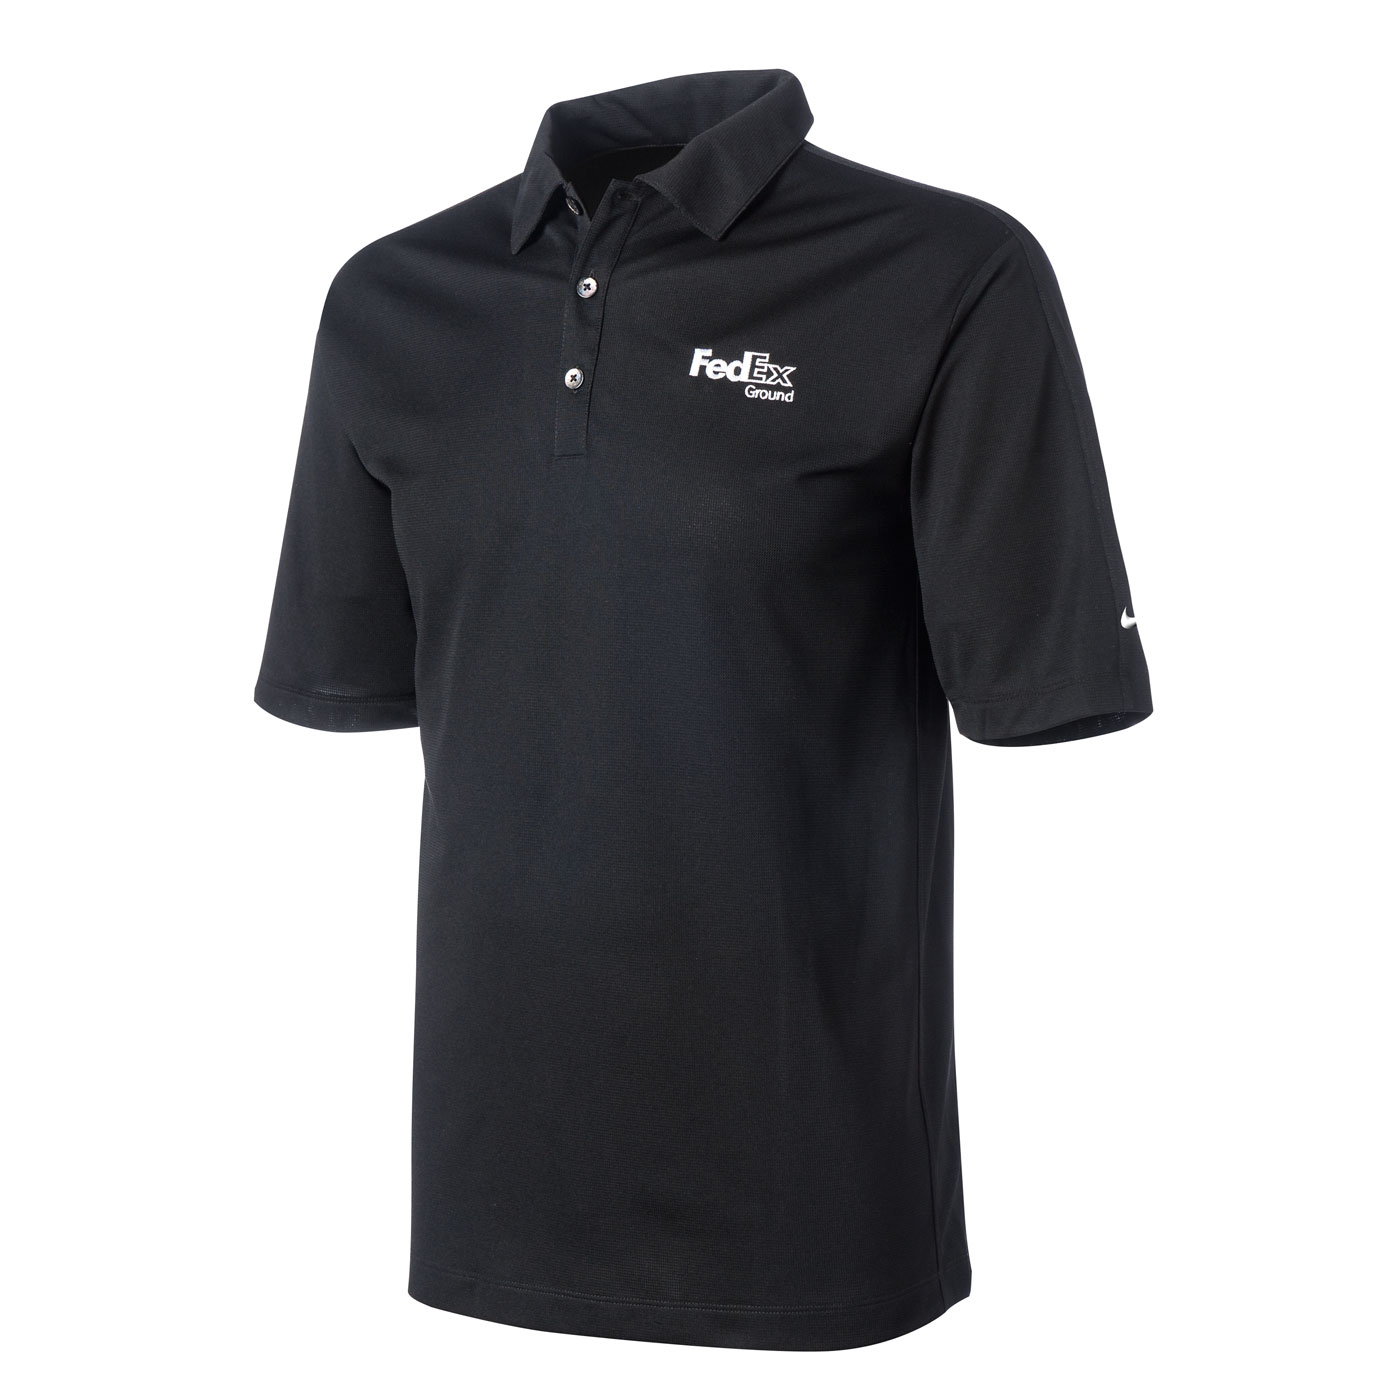 FedEx Ground Nike® Dri-FIT Tech Polo | The FedEx Company Store